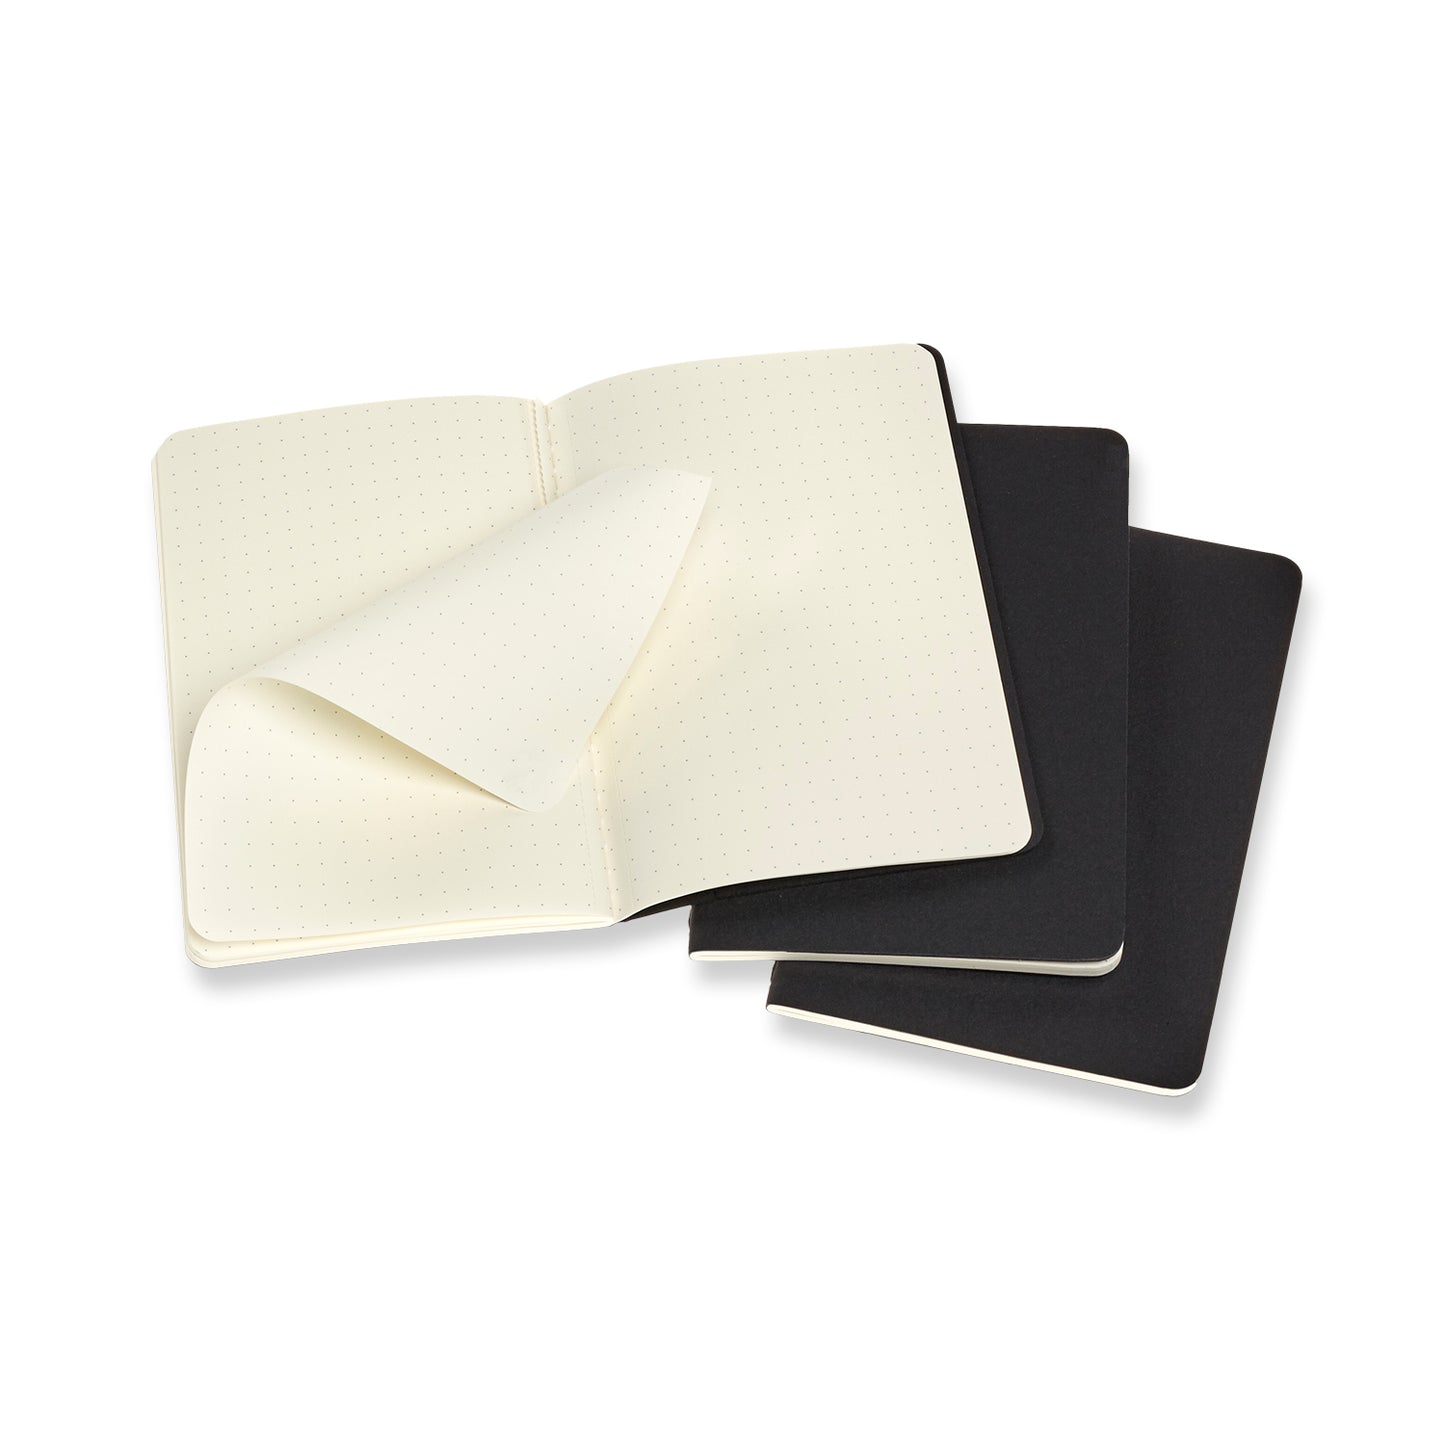 Dark Slate Gray Pocket Cahier Notebook - Set of 3 Black / Ruled / Pocket,Black / Plain / Pocket,Black / Dotted / Pocket,Black / Squared / Pocket,Brisk Blue / Ruled / Pocket,Brisk Blue / Plain / Pocket,Brisk Blue / Dotted / Pocket,Brisk Blue / Squared / Pocket Moleskine